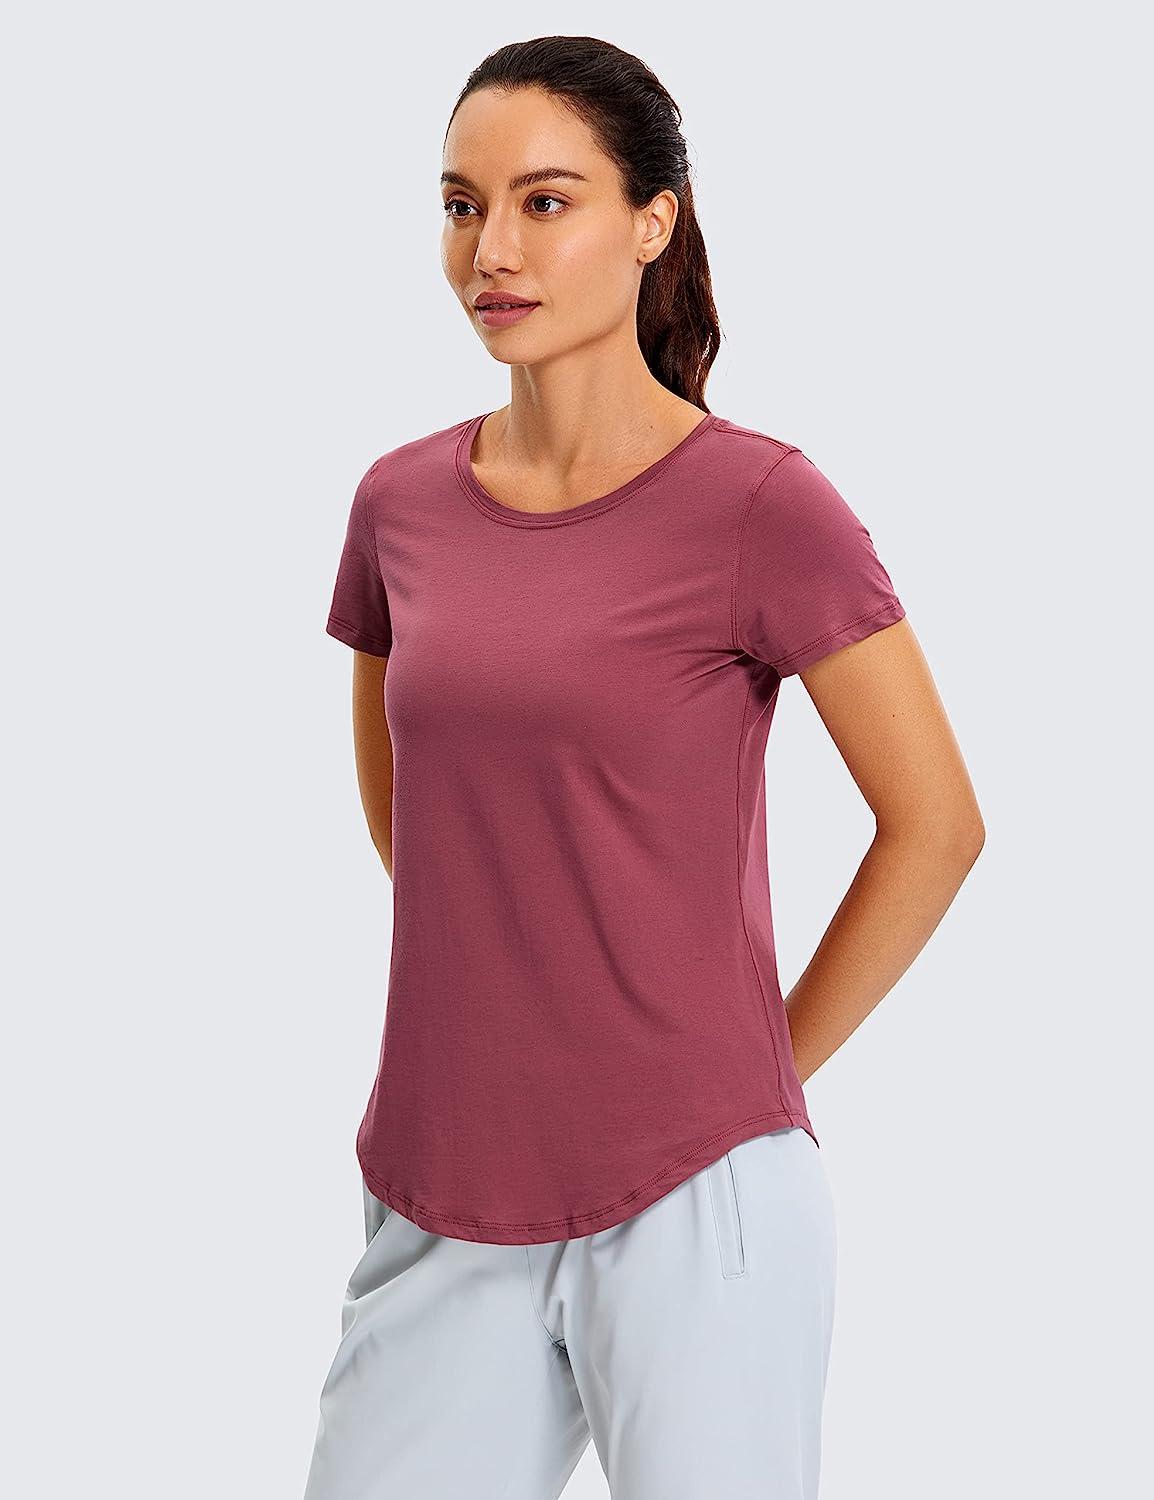 CRZ YOGA Women's Pima Cotton Short Sleeve Workout Shirt Yoga T-Shirt  Athletic Tee Top Medium Misty Merlot